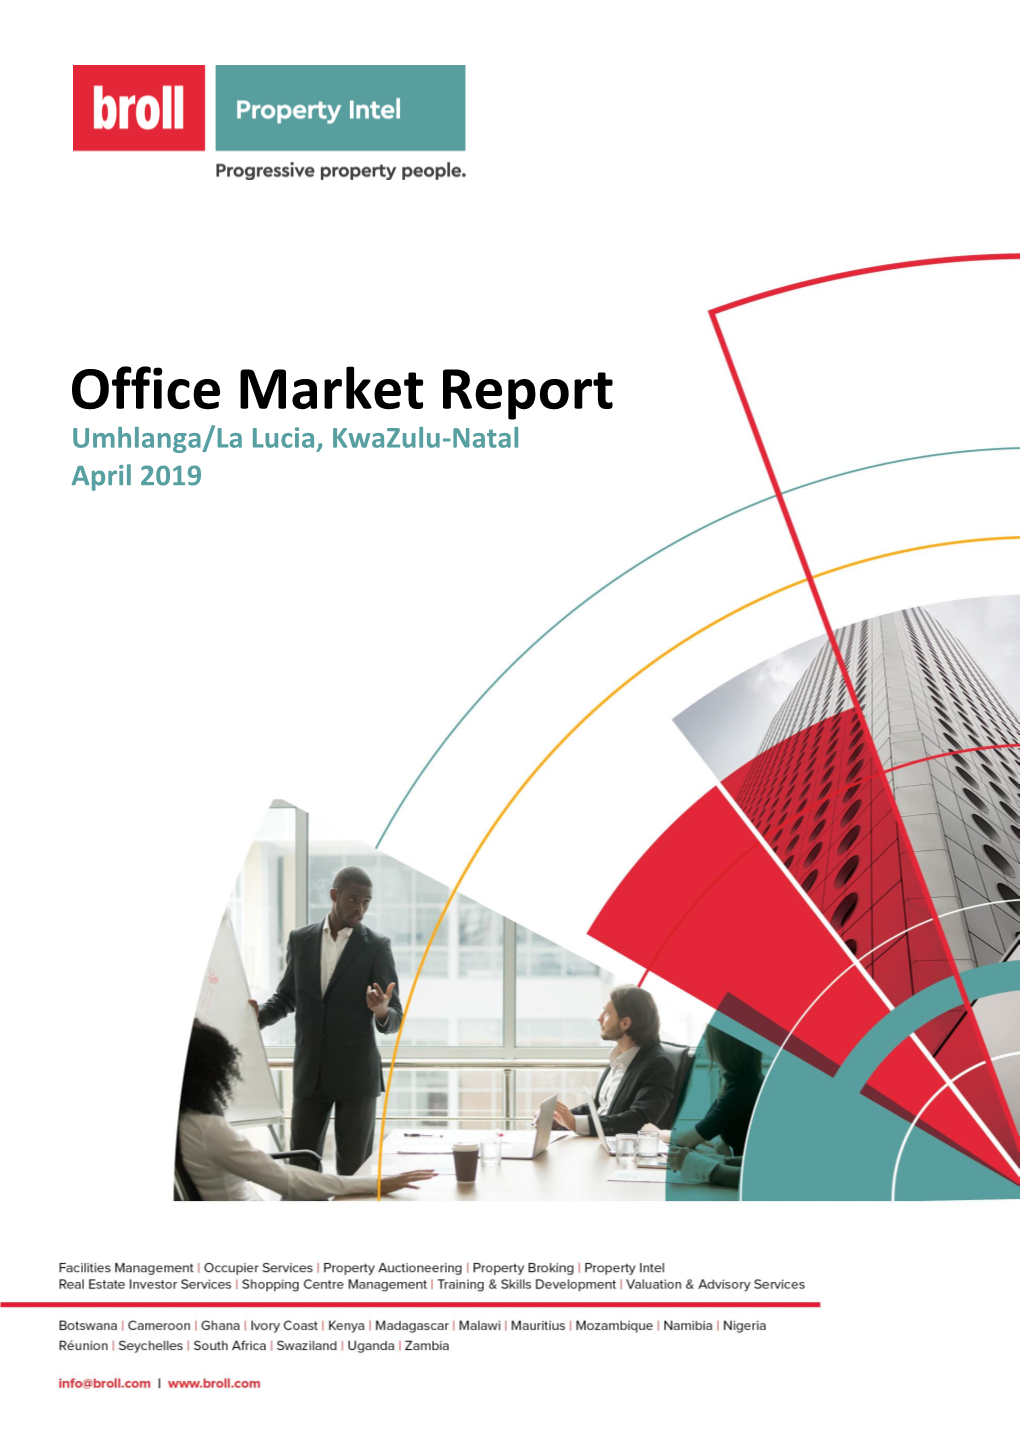 Office Market Report Umhlanga/La Lucia, Kwazulu-Natal